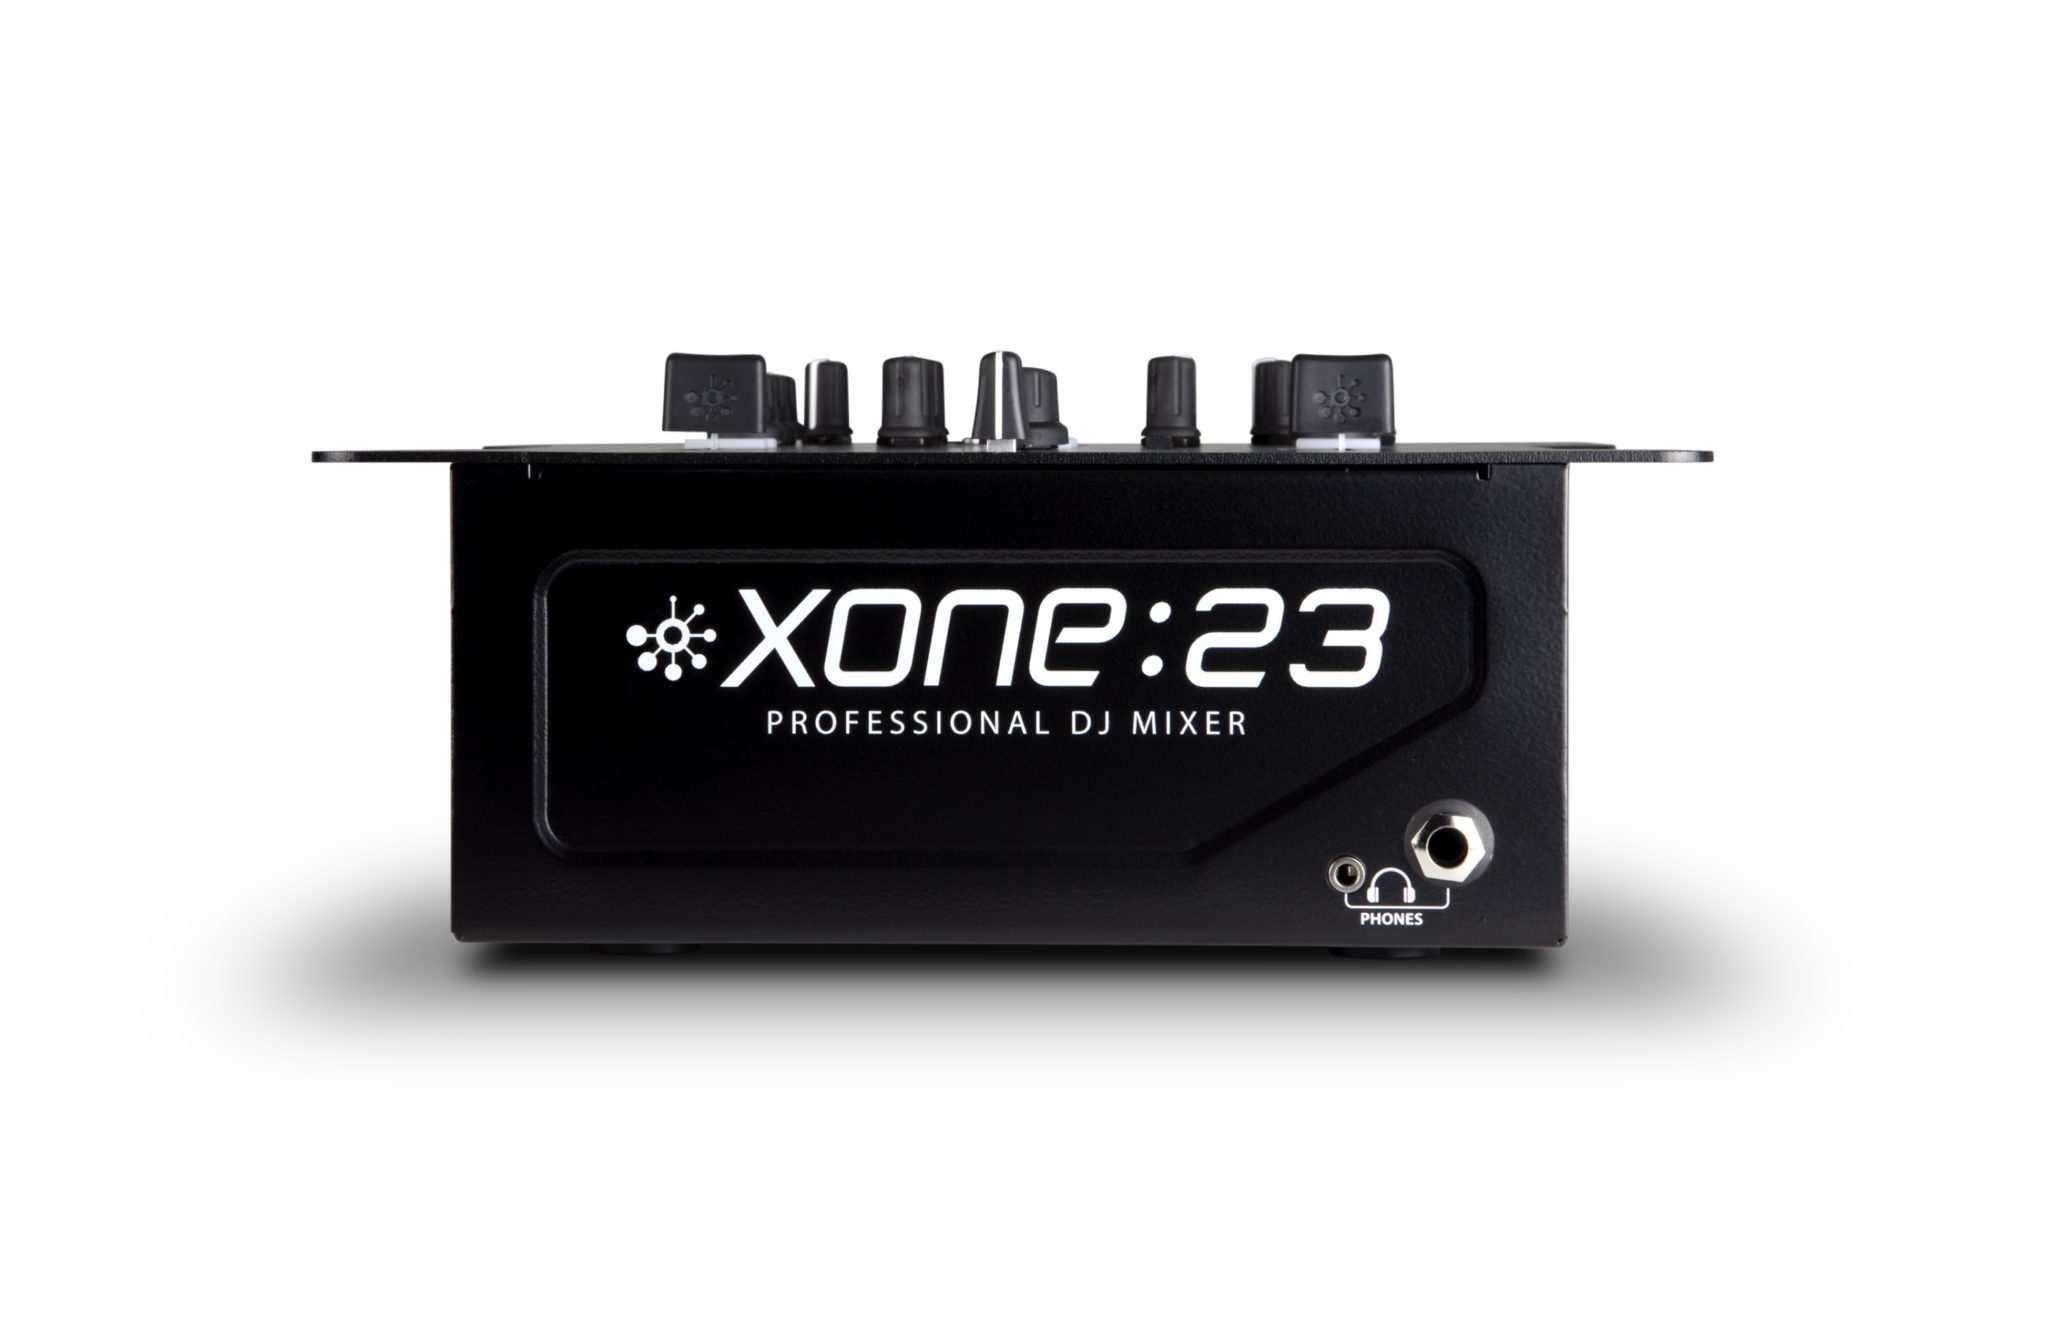 xone mixed in key 4